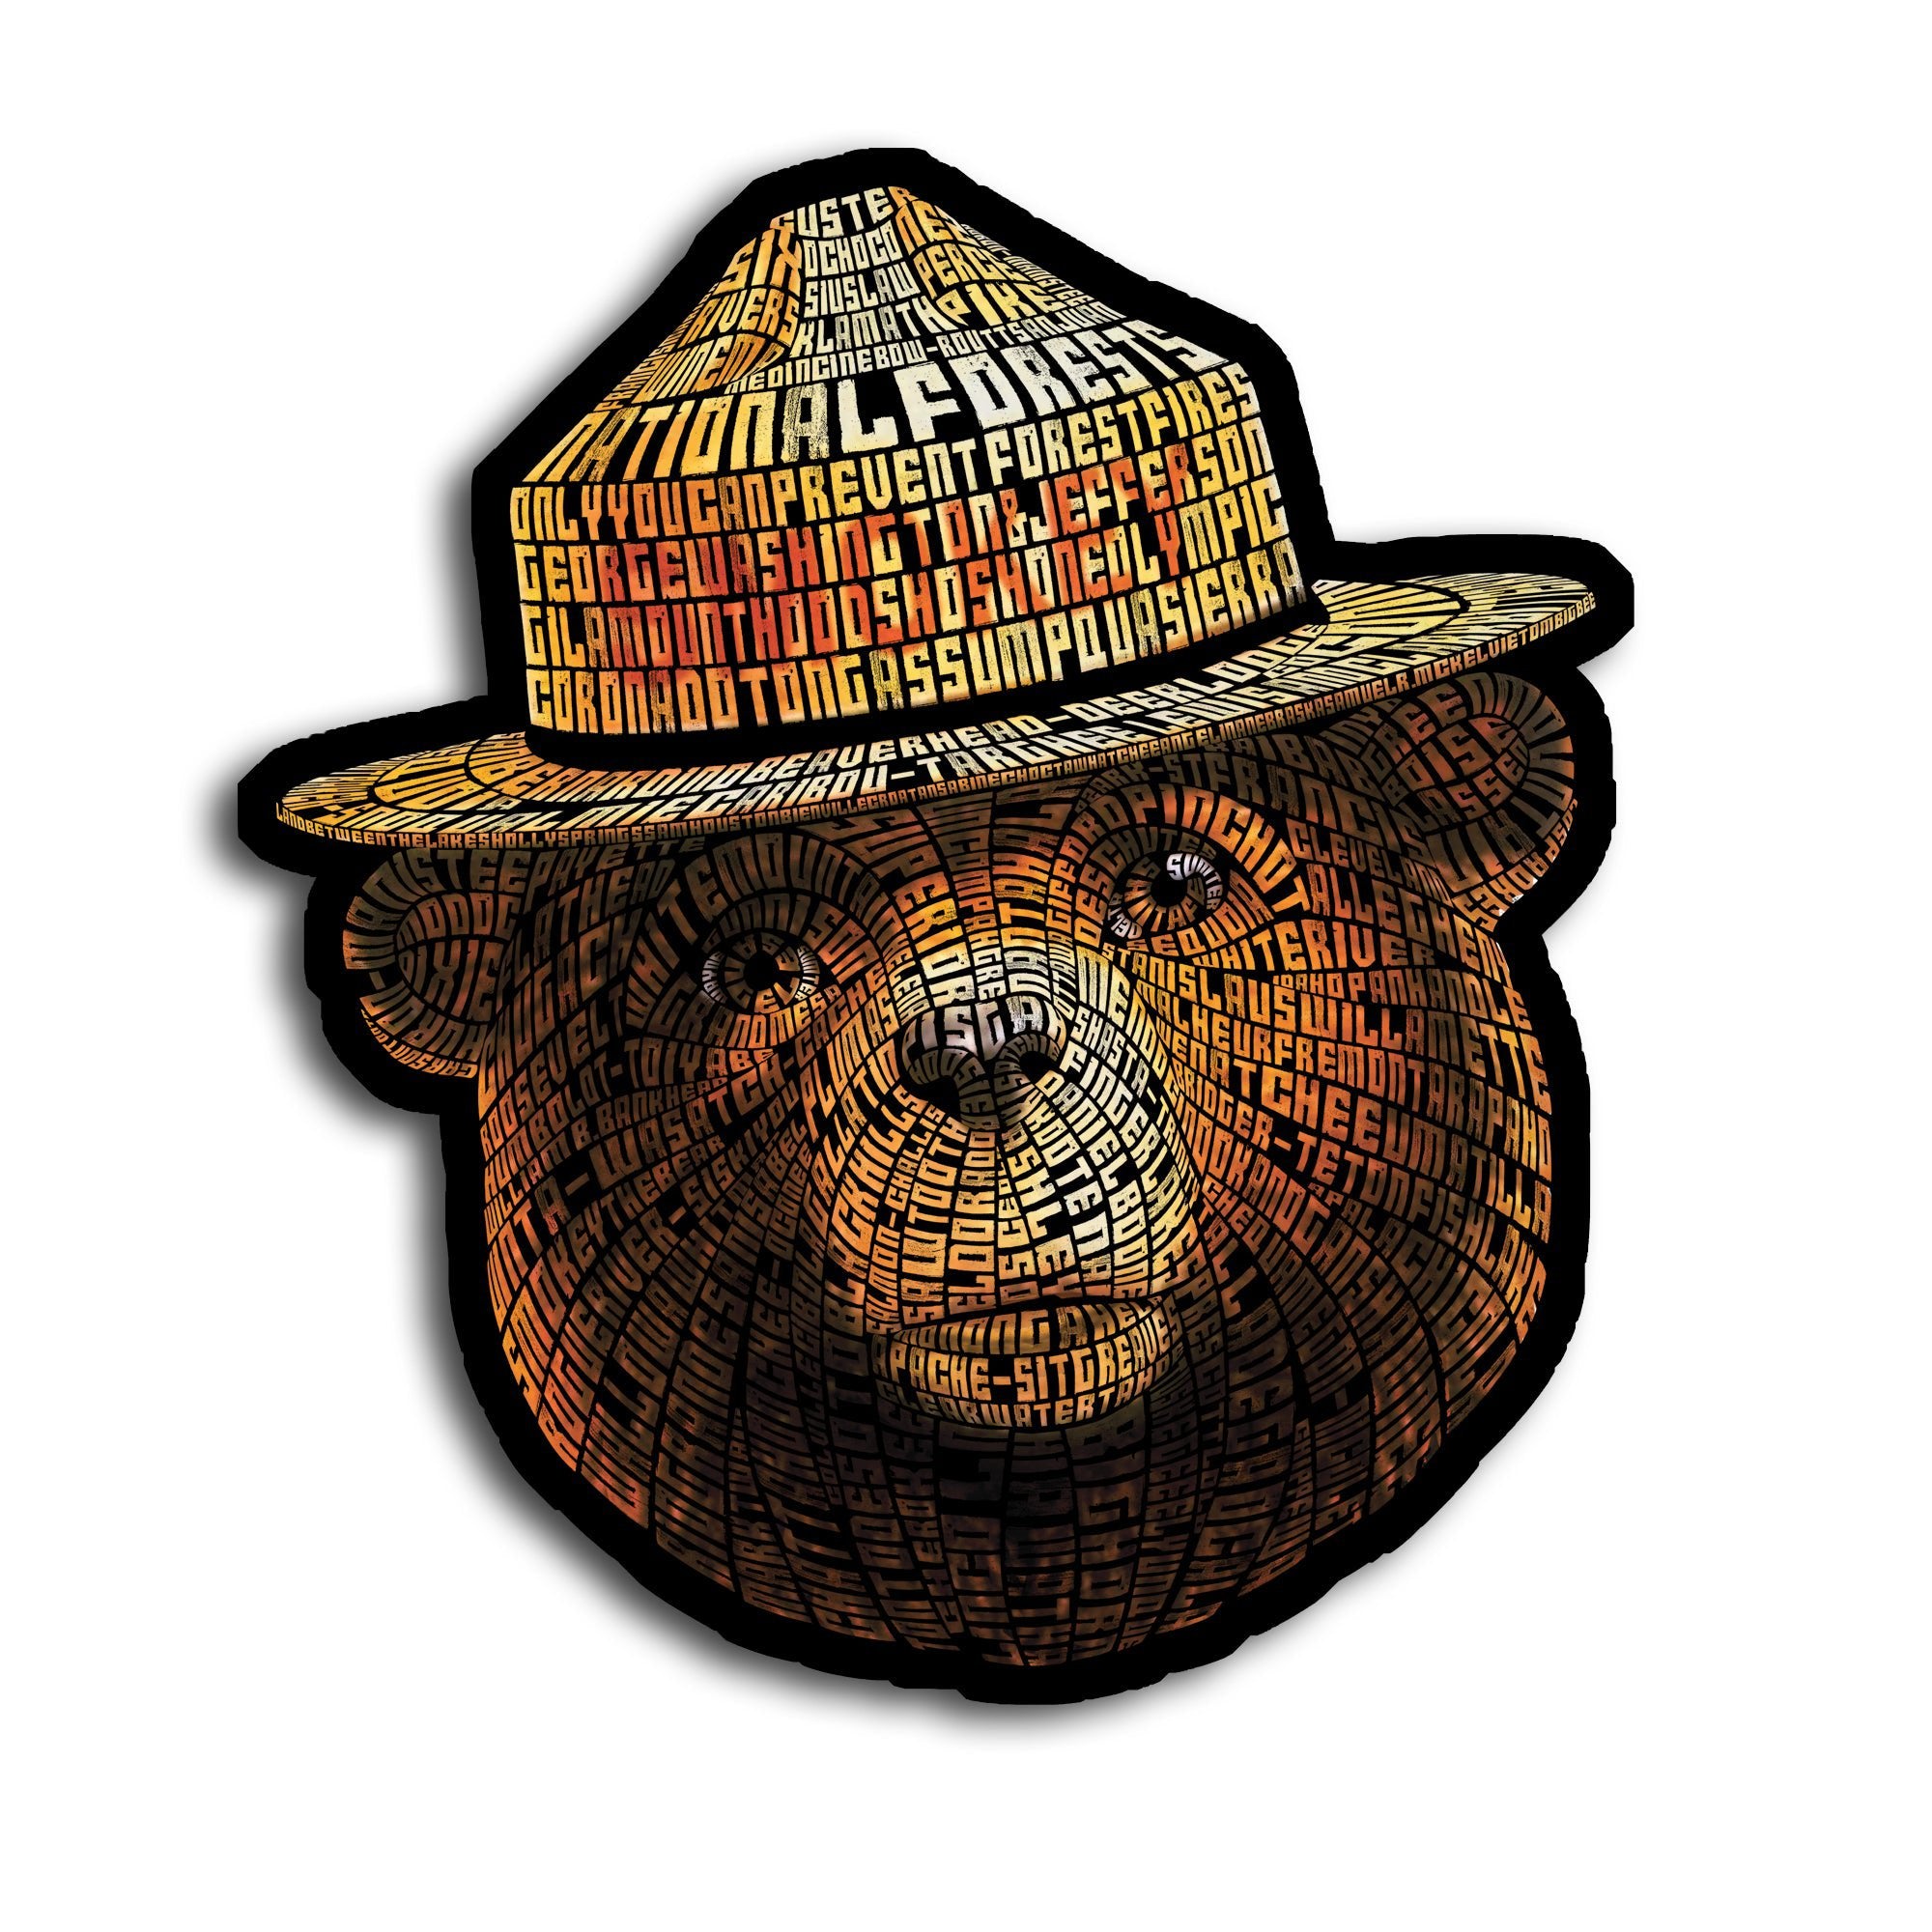 Smokey Bear Sticker